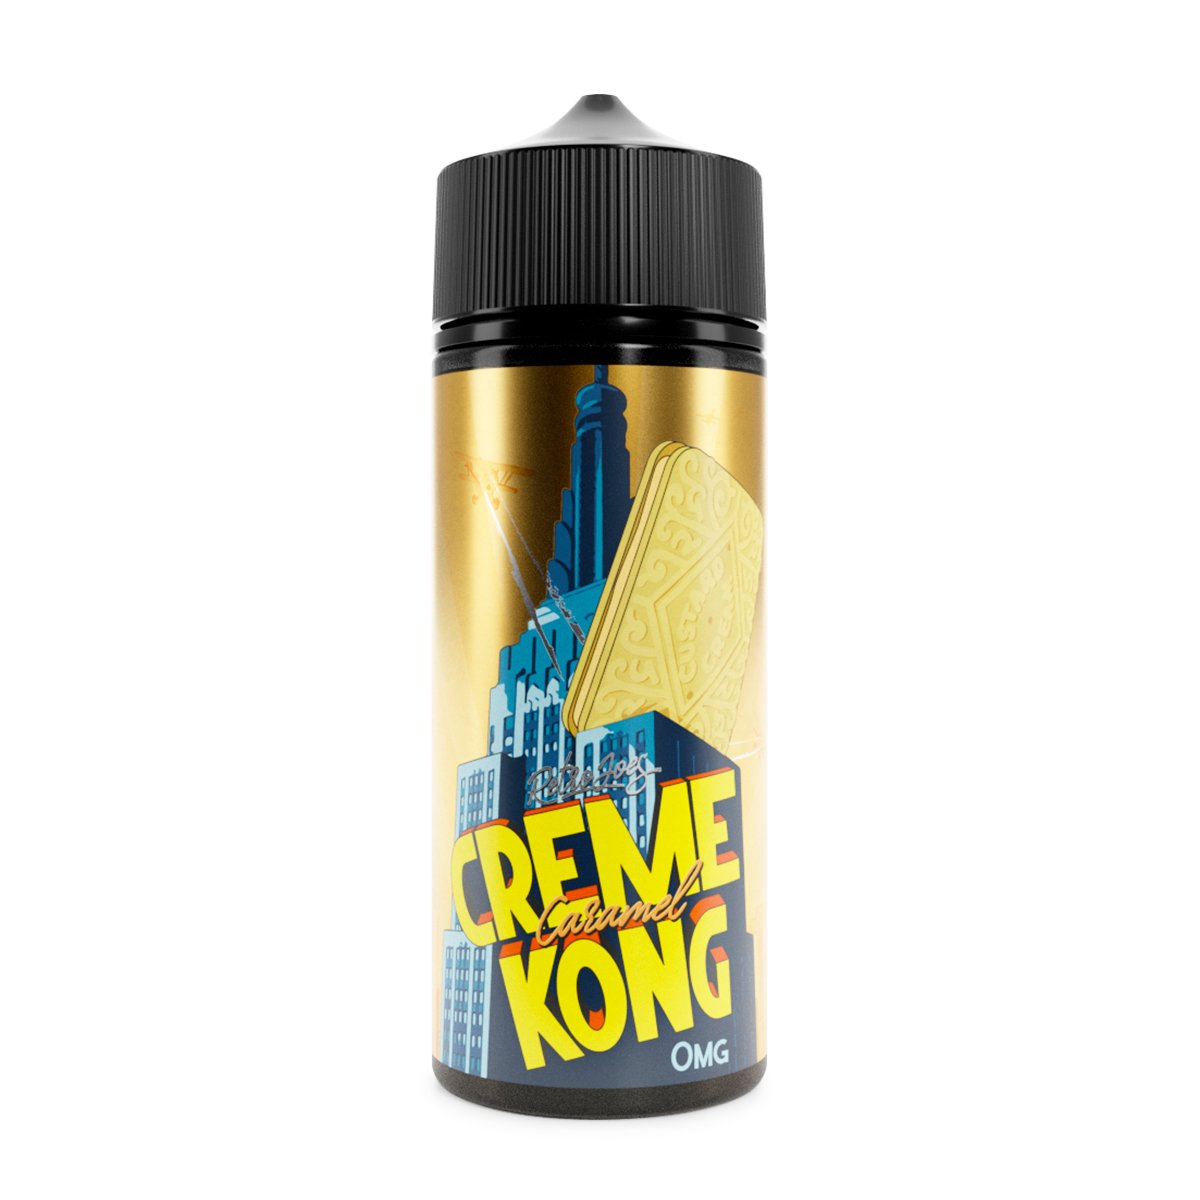 Retro Joes Creme Kong Caramel 0mg 100ml Shortfill E-Liquid